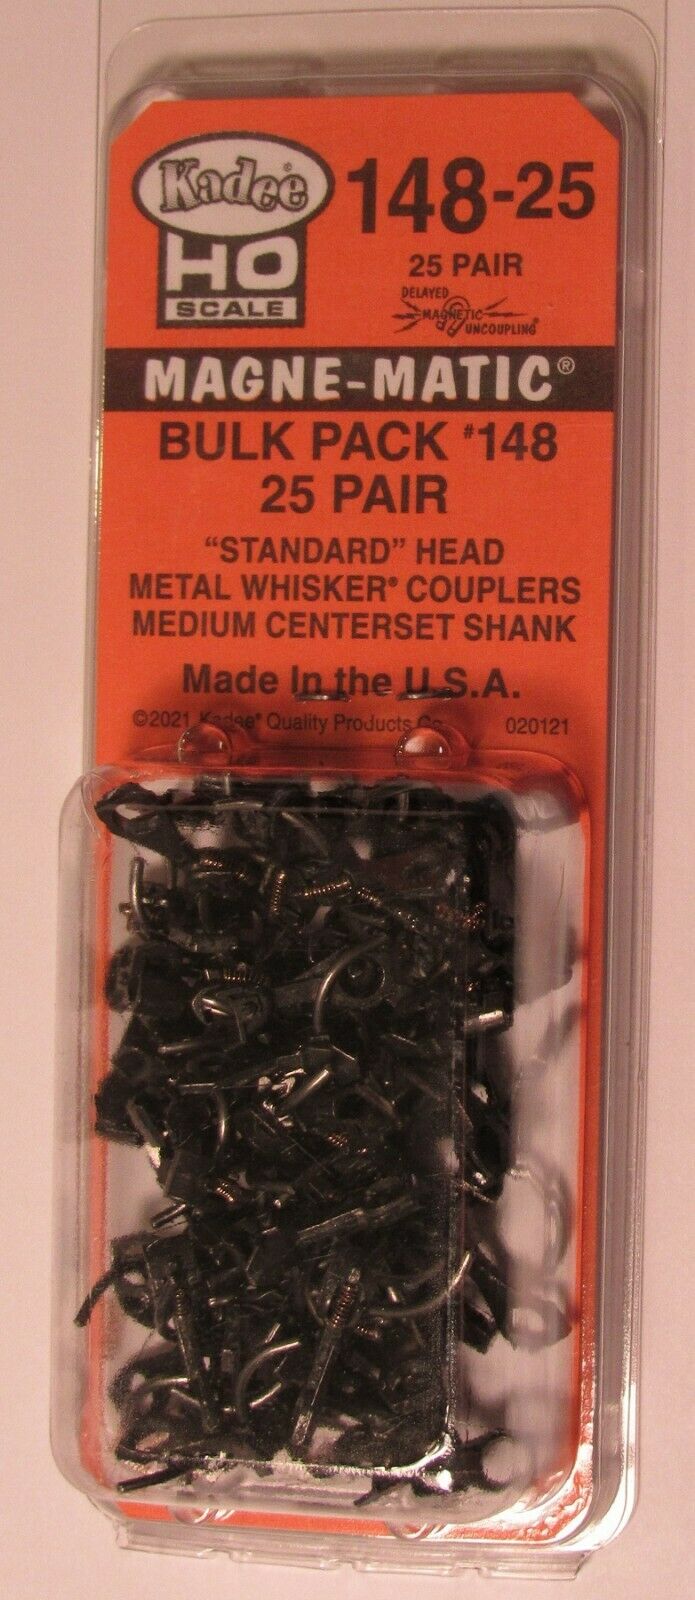 Kadee Ho Scale #14 Bulk Pack #148 X 25 Pair Metal Whisker Couplers (#148-25)